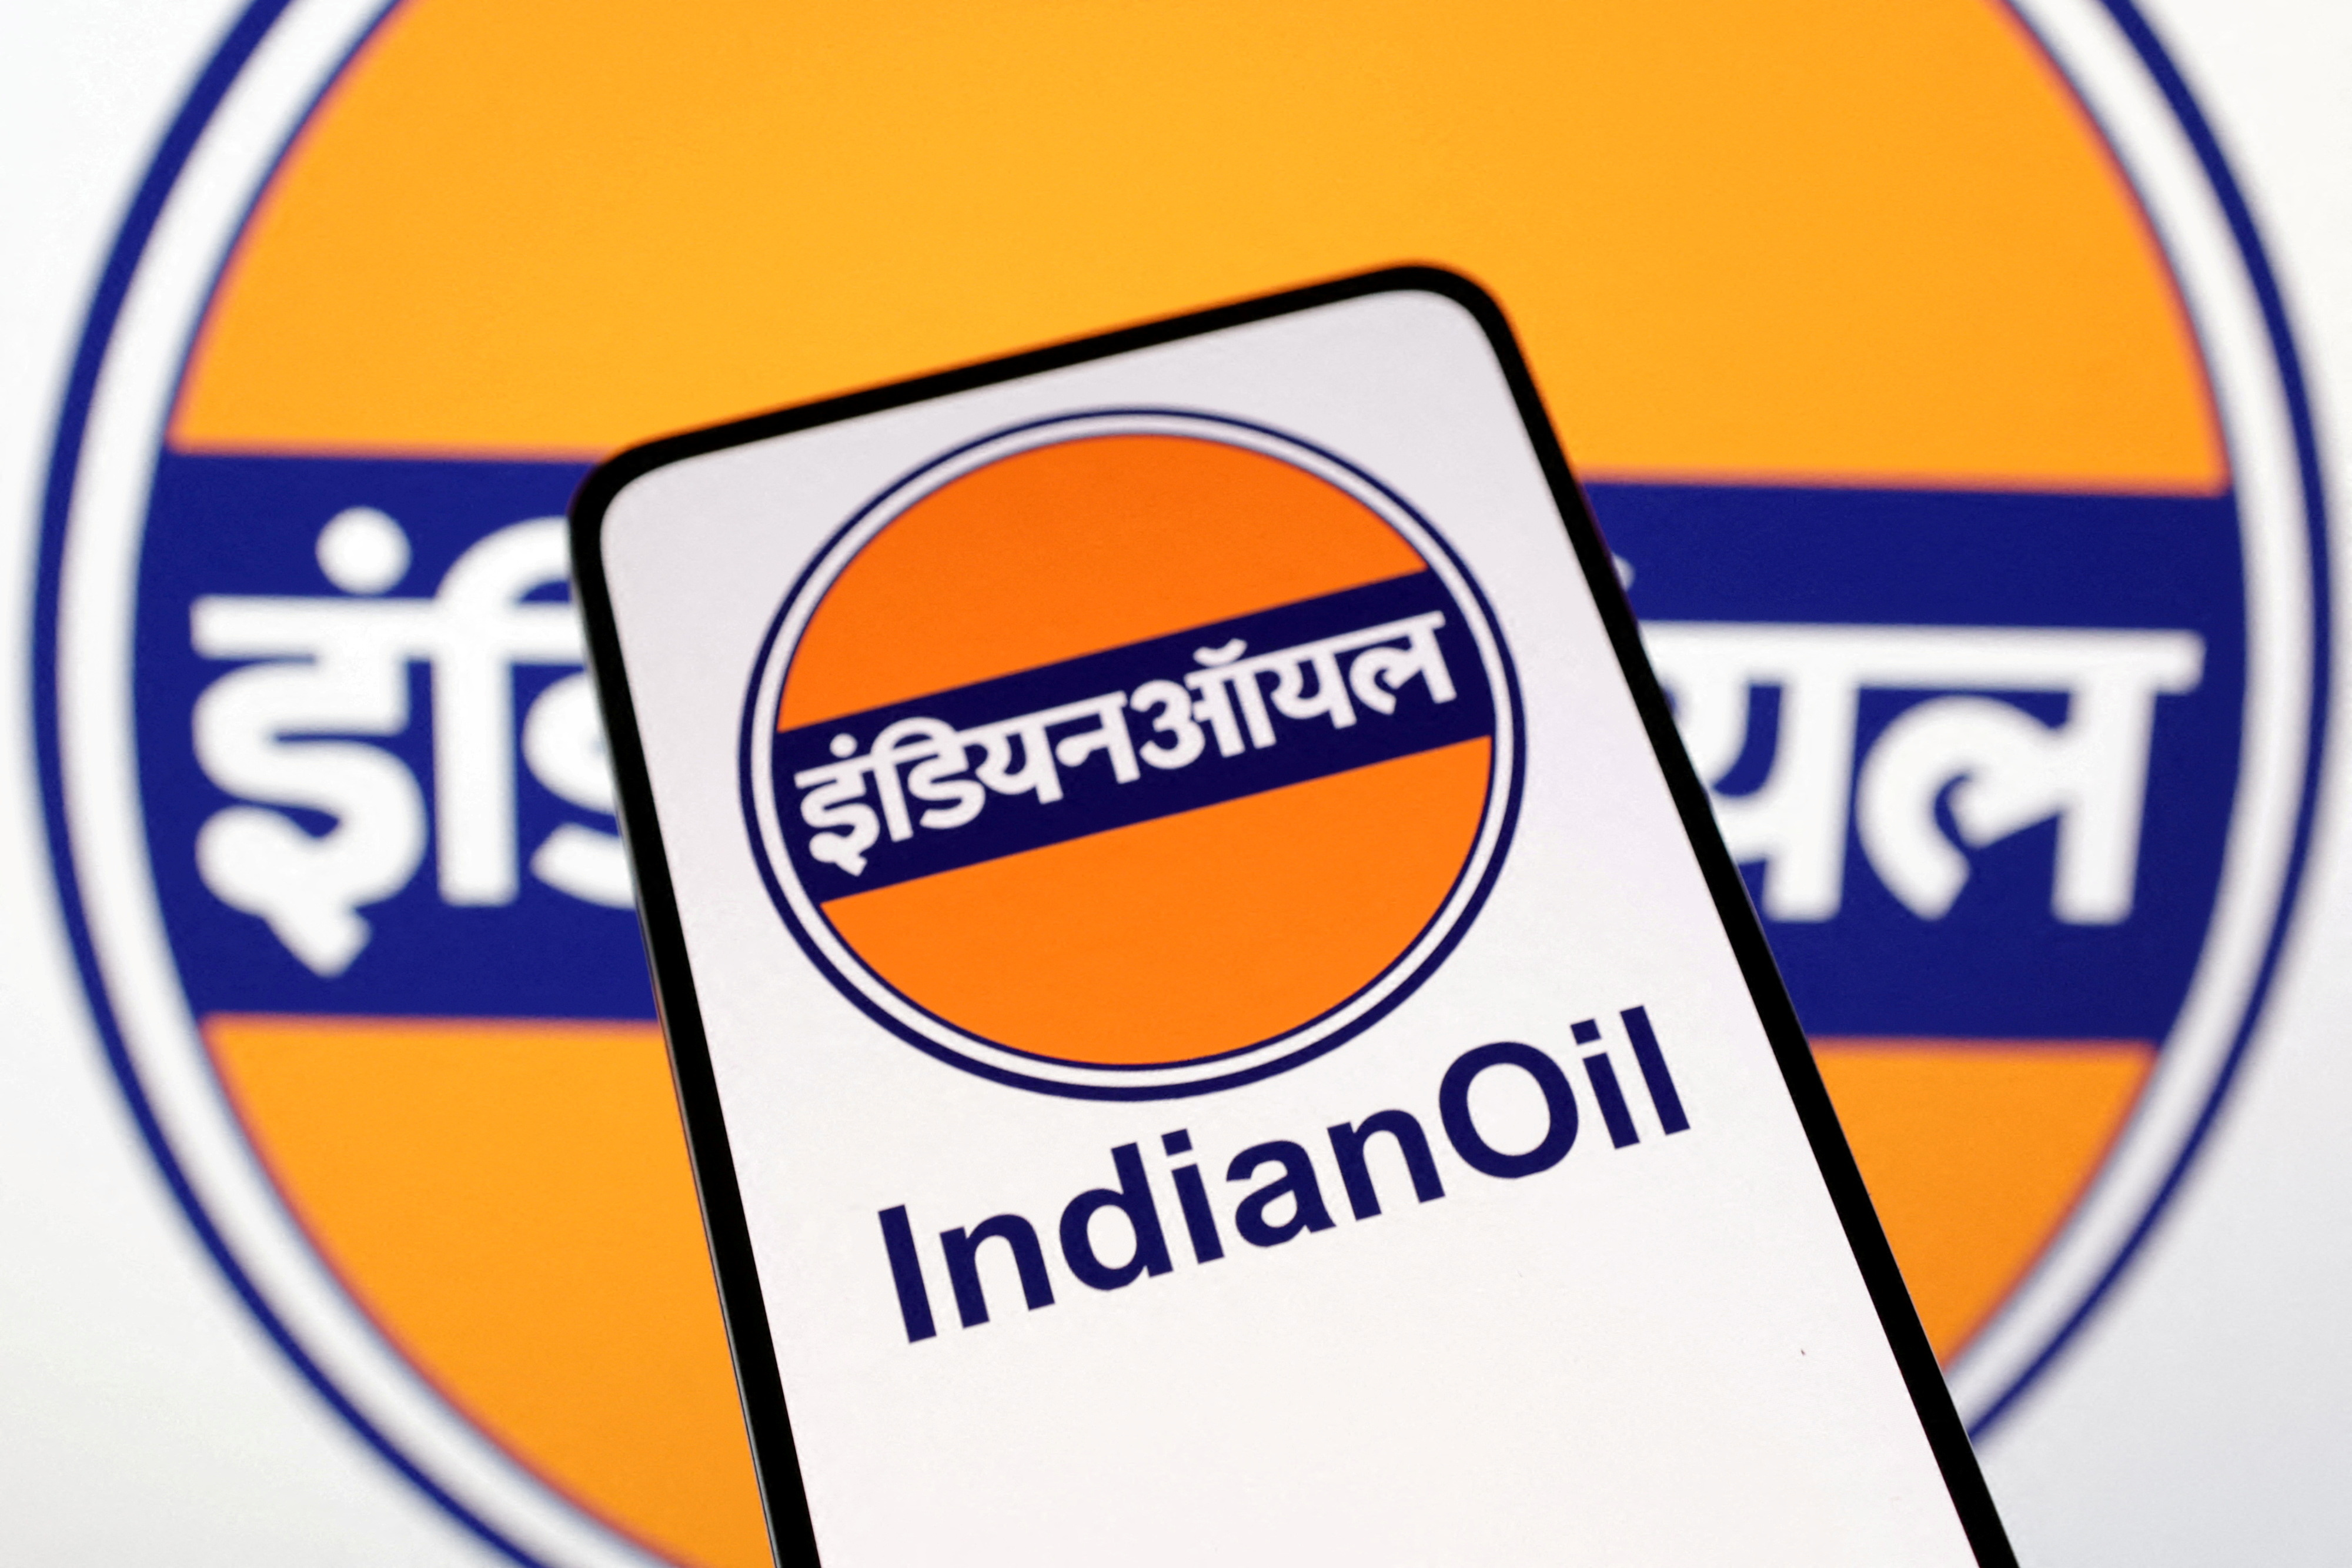 Illustration showing Indian Oil Corp Ltd logo